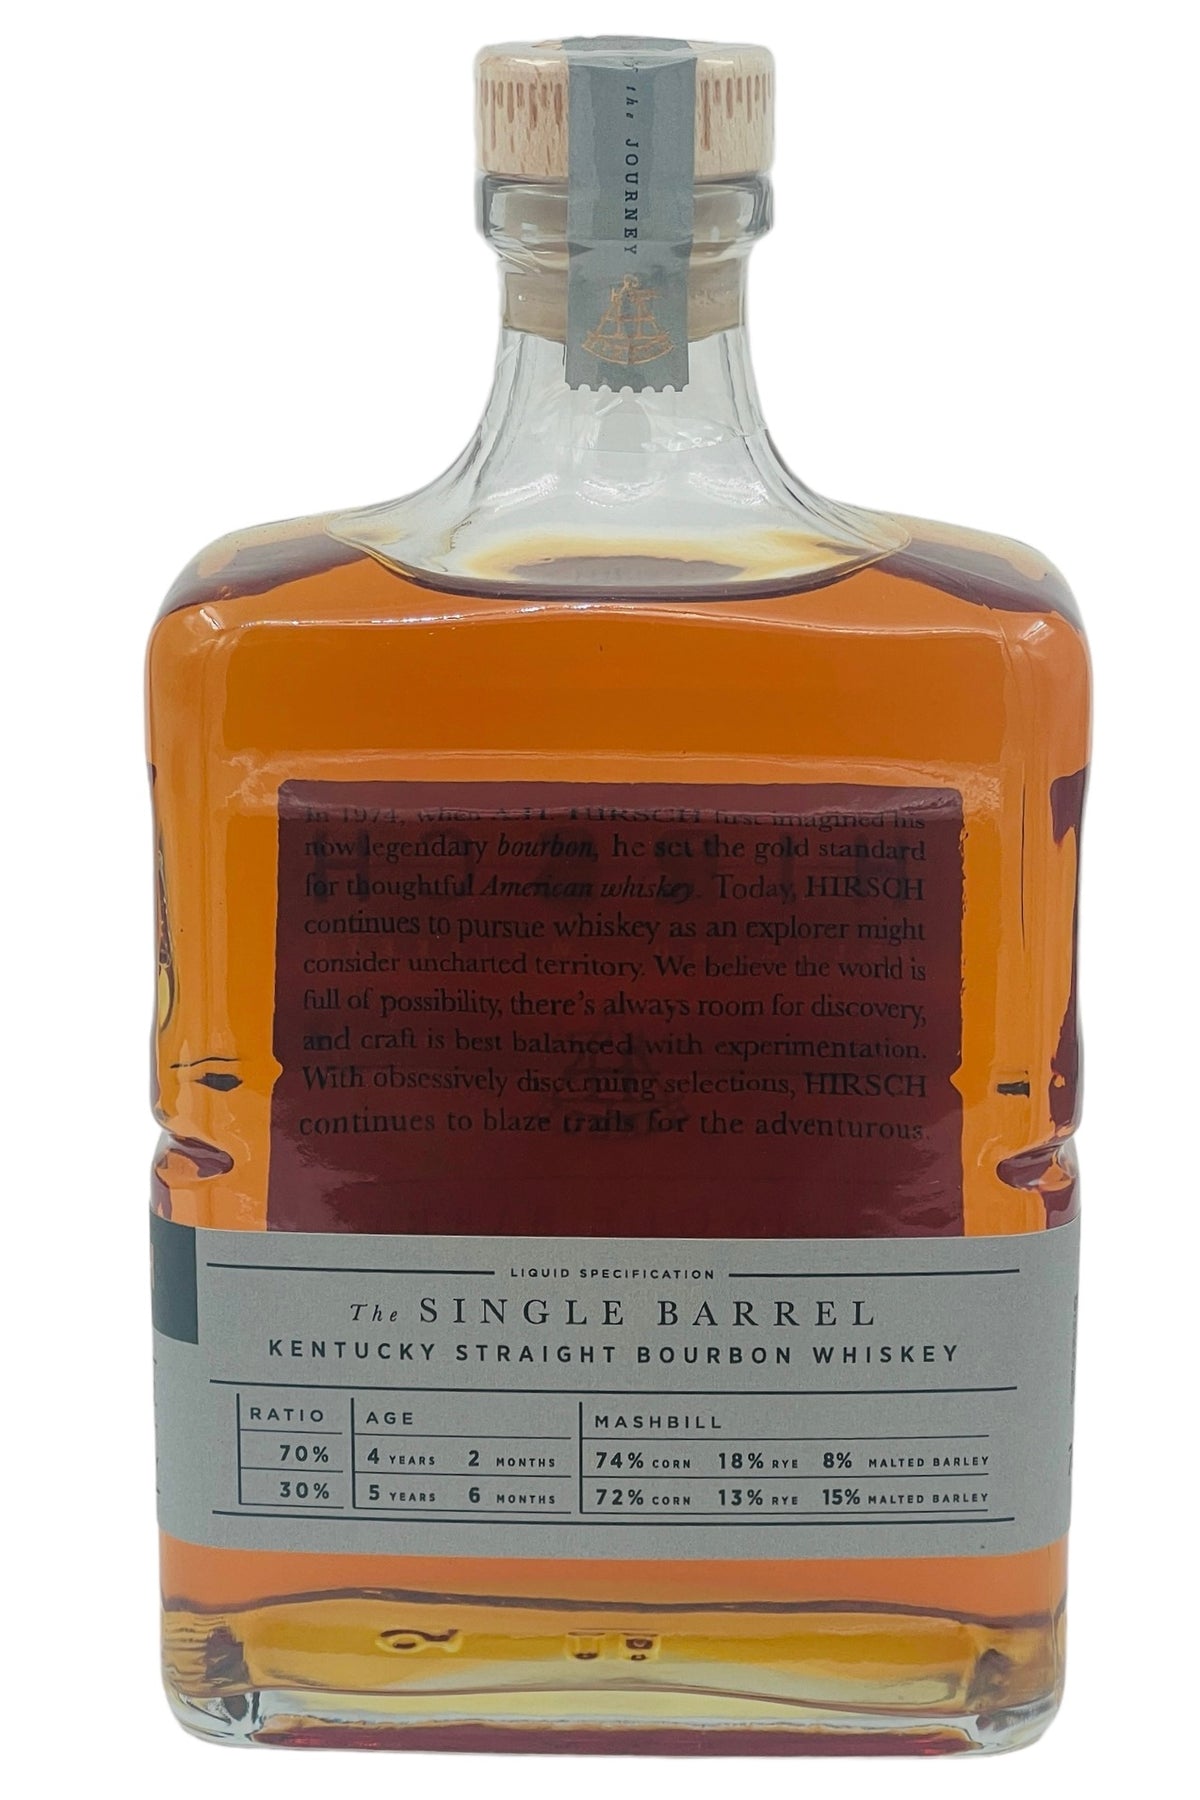 Hirsch &quot;The Single Barrel&quot; Silver Label Bourbon Whiskey, Batch SLV230-10